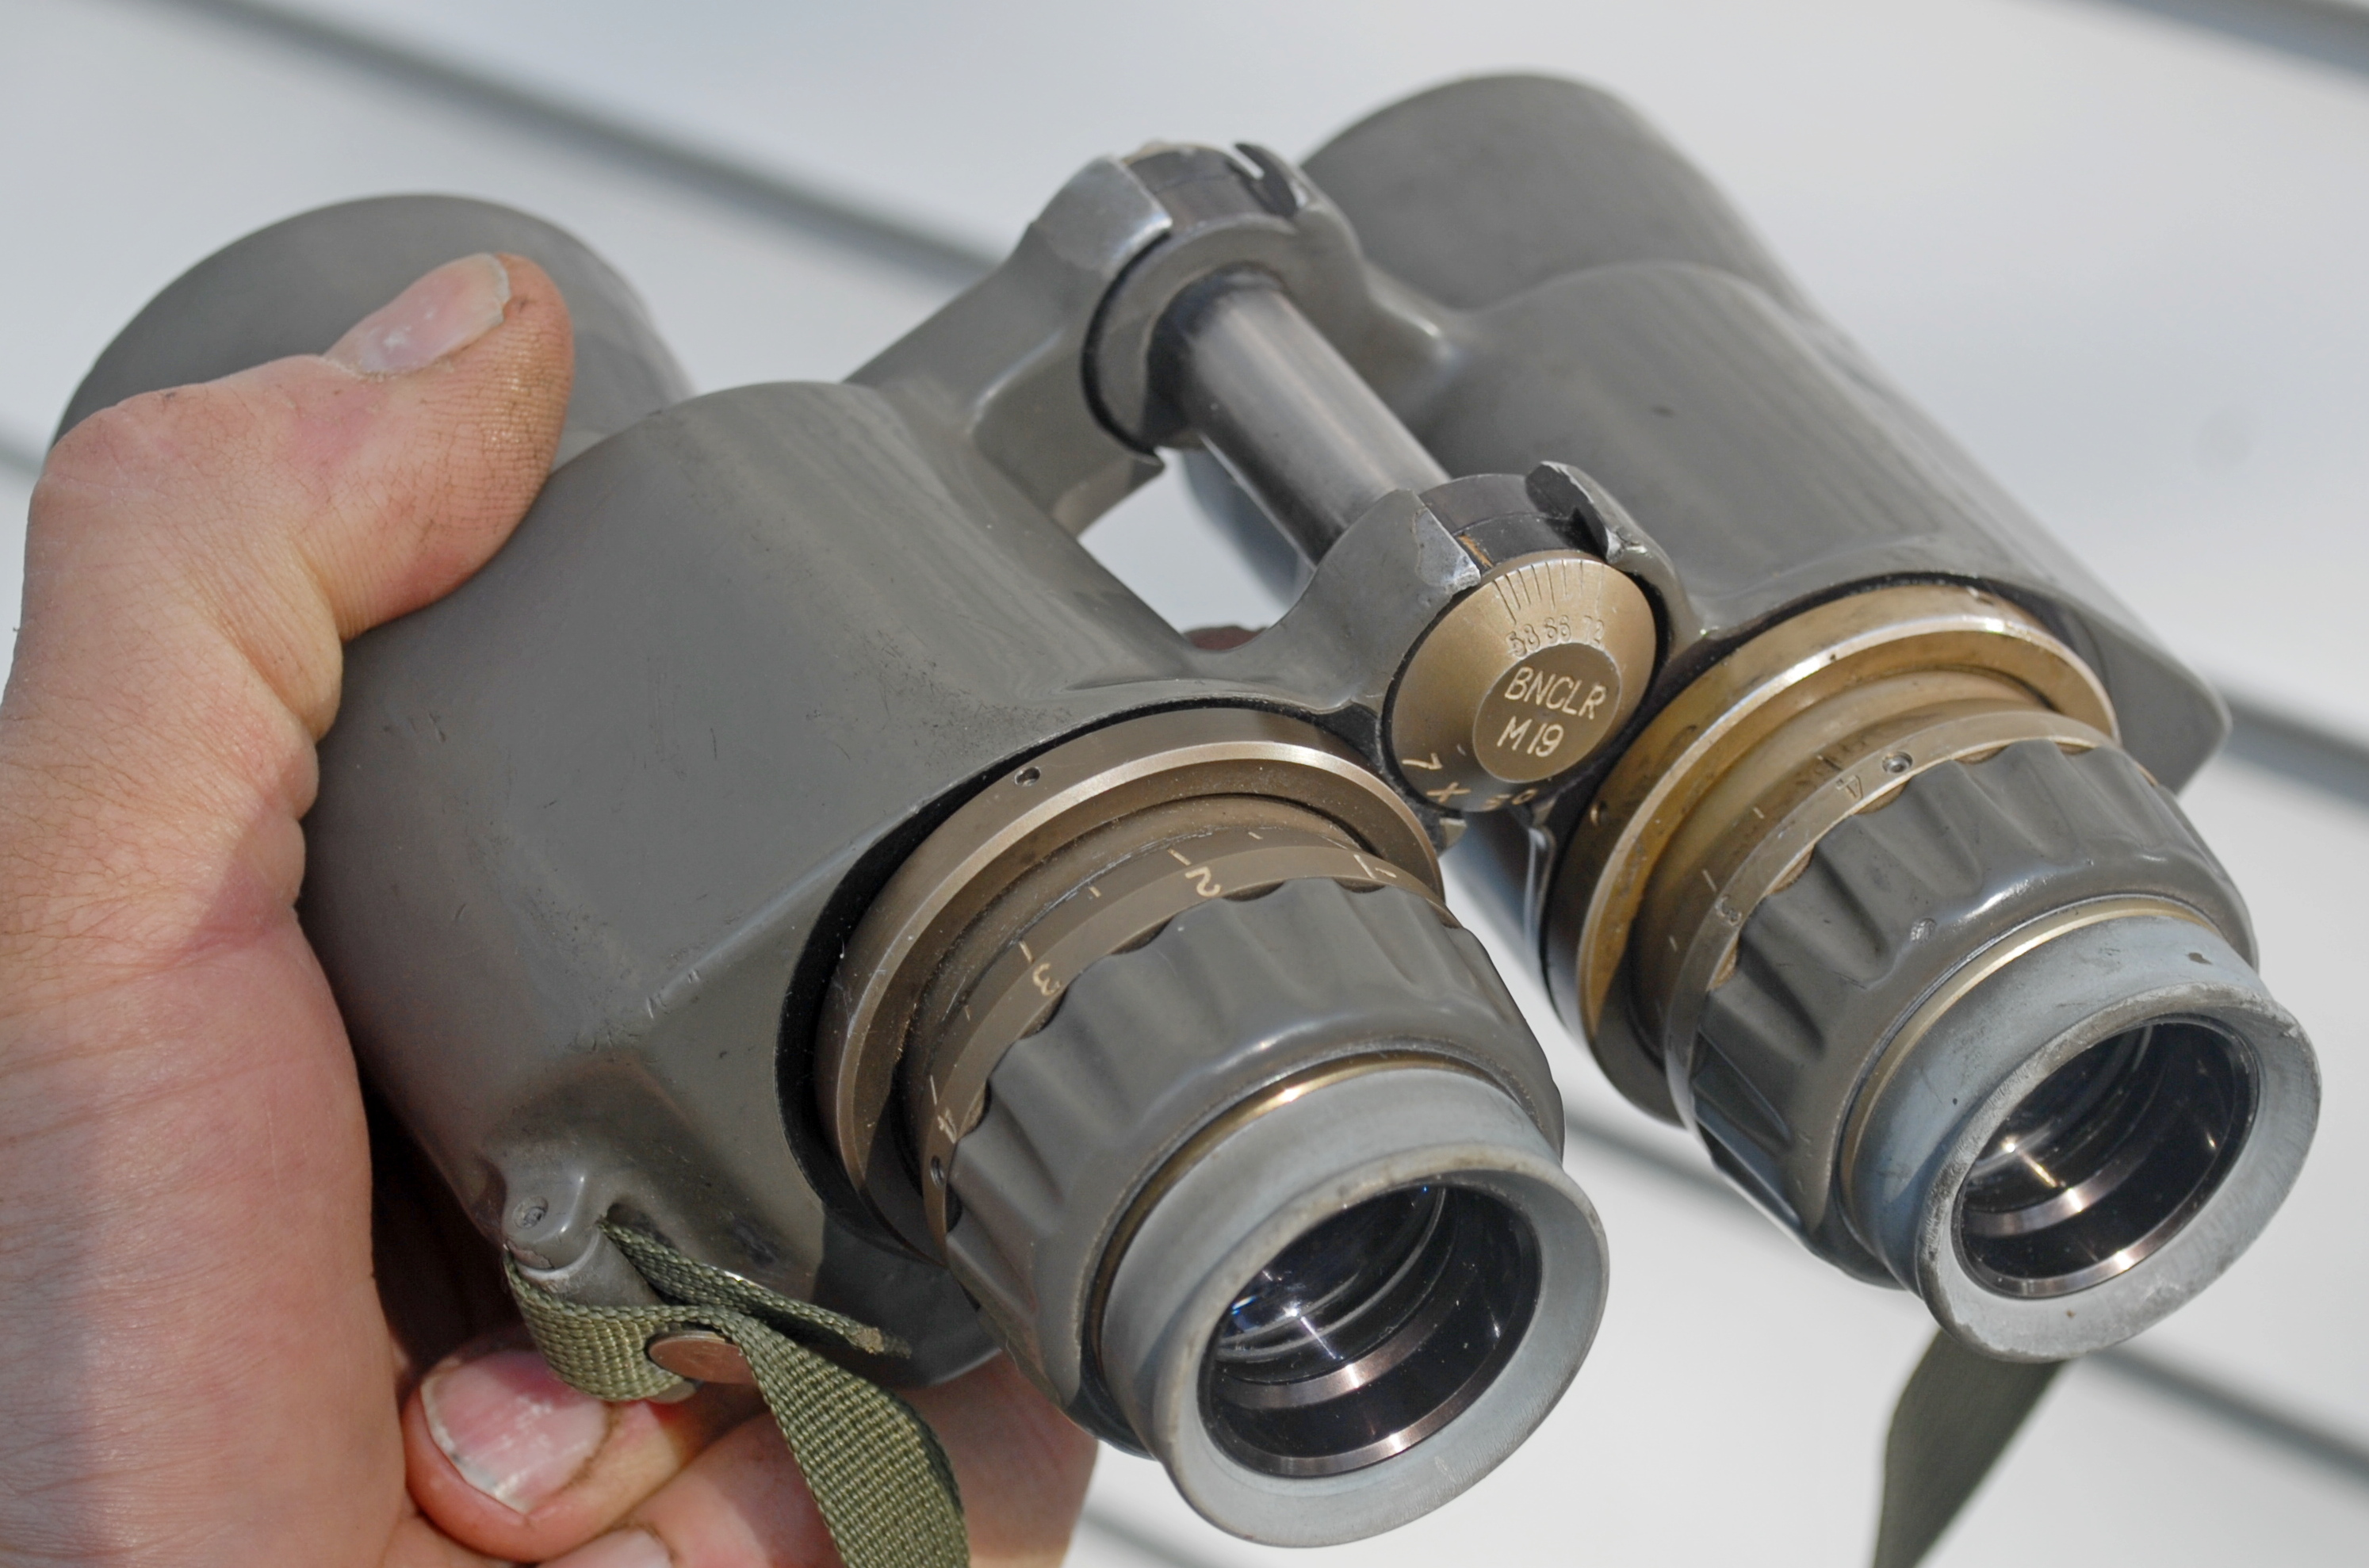 Siamese Cat Miniature Binoculars